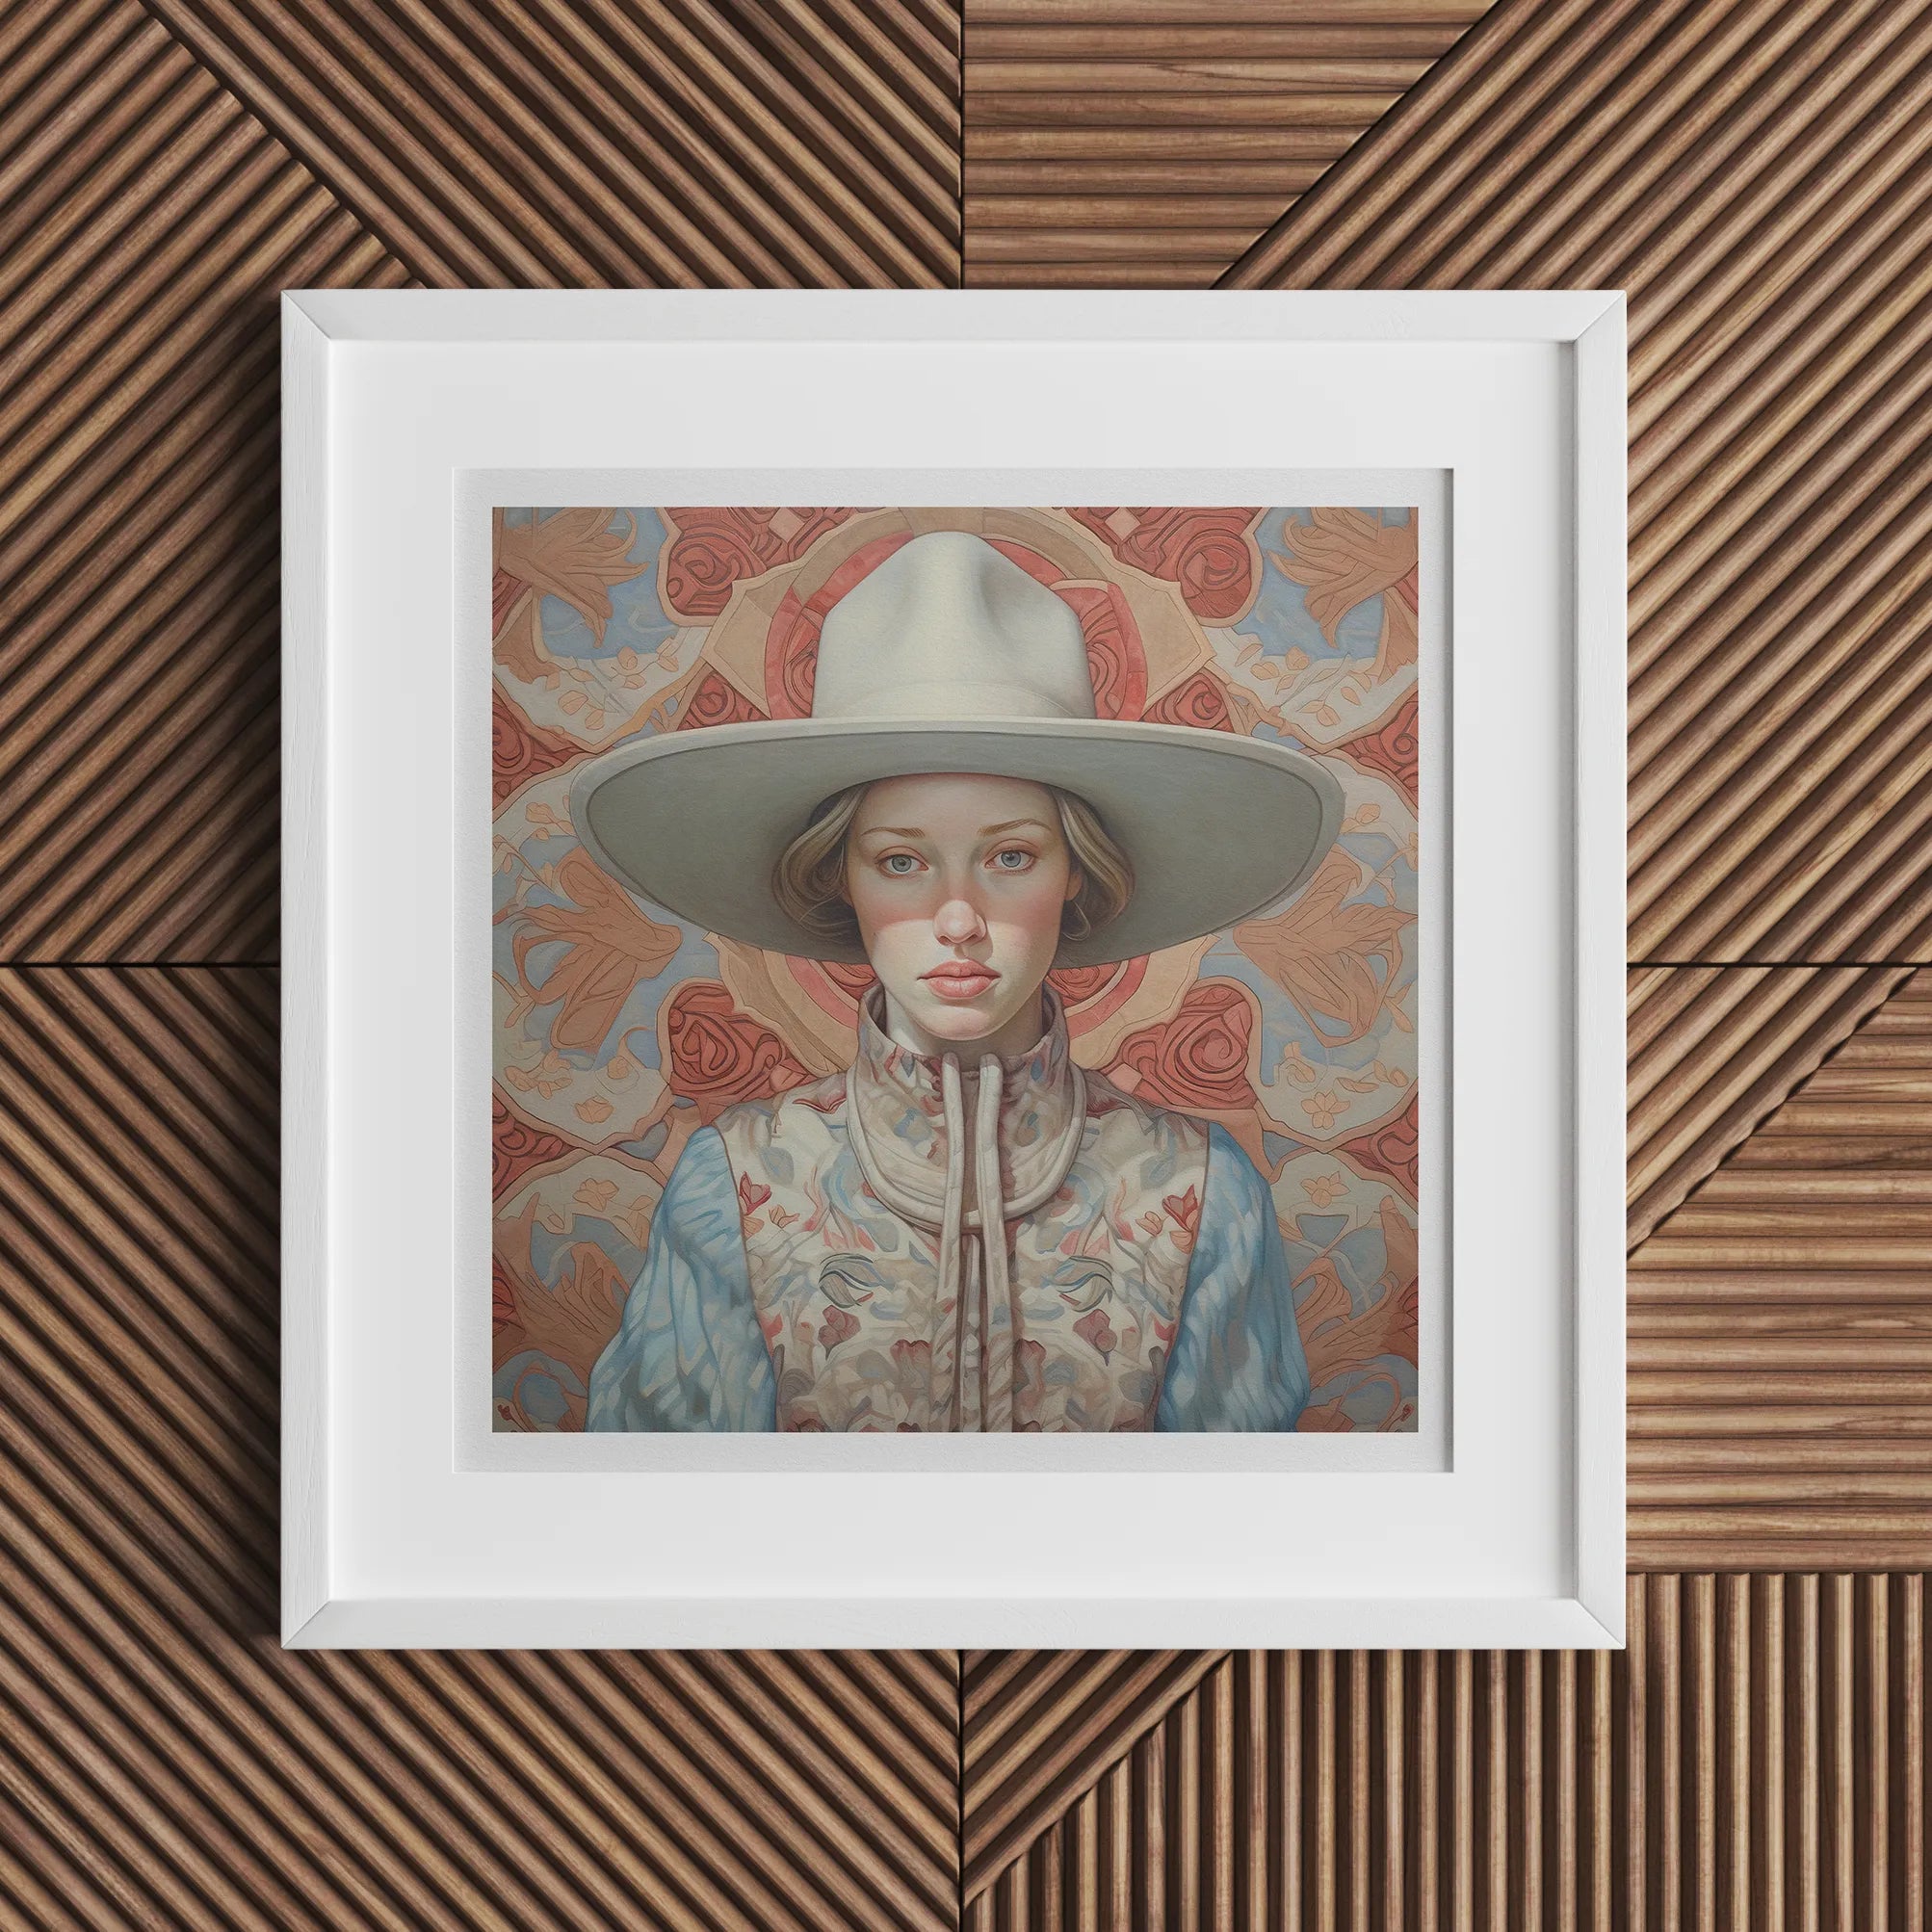 Lottie - Lesbian Cowgirl Art Print - Wlw Sapphic Femme - 16’x16’ - Posters Prints & Visual Artwork - Aesthetic Art